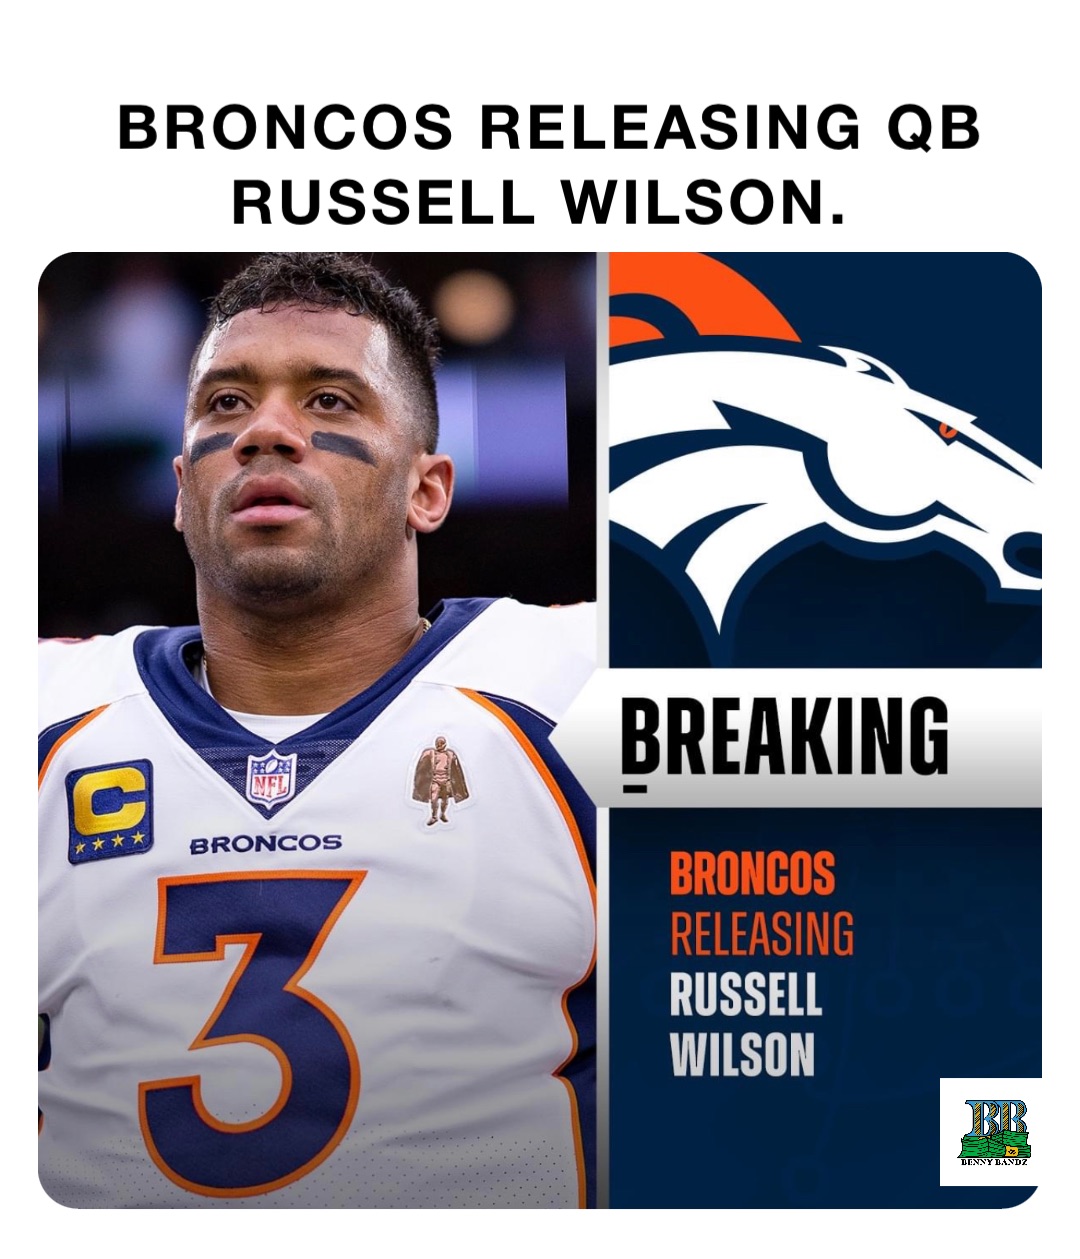 Broncos releasing QB Russell Wilson.